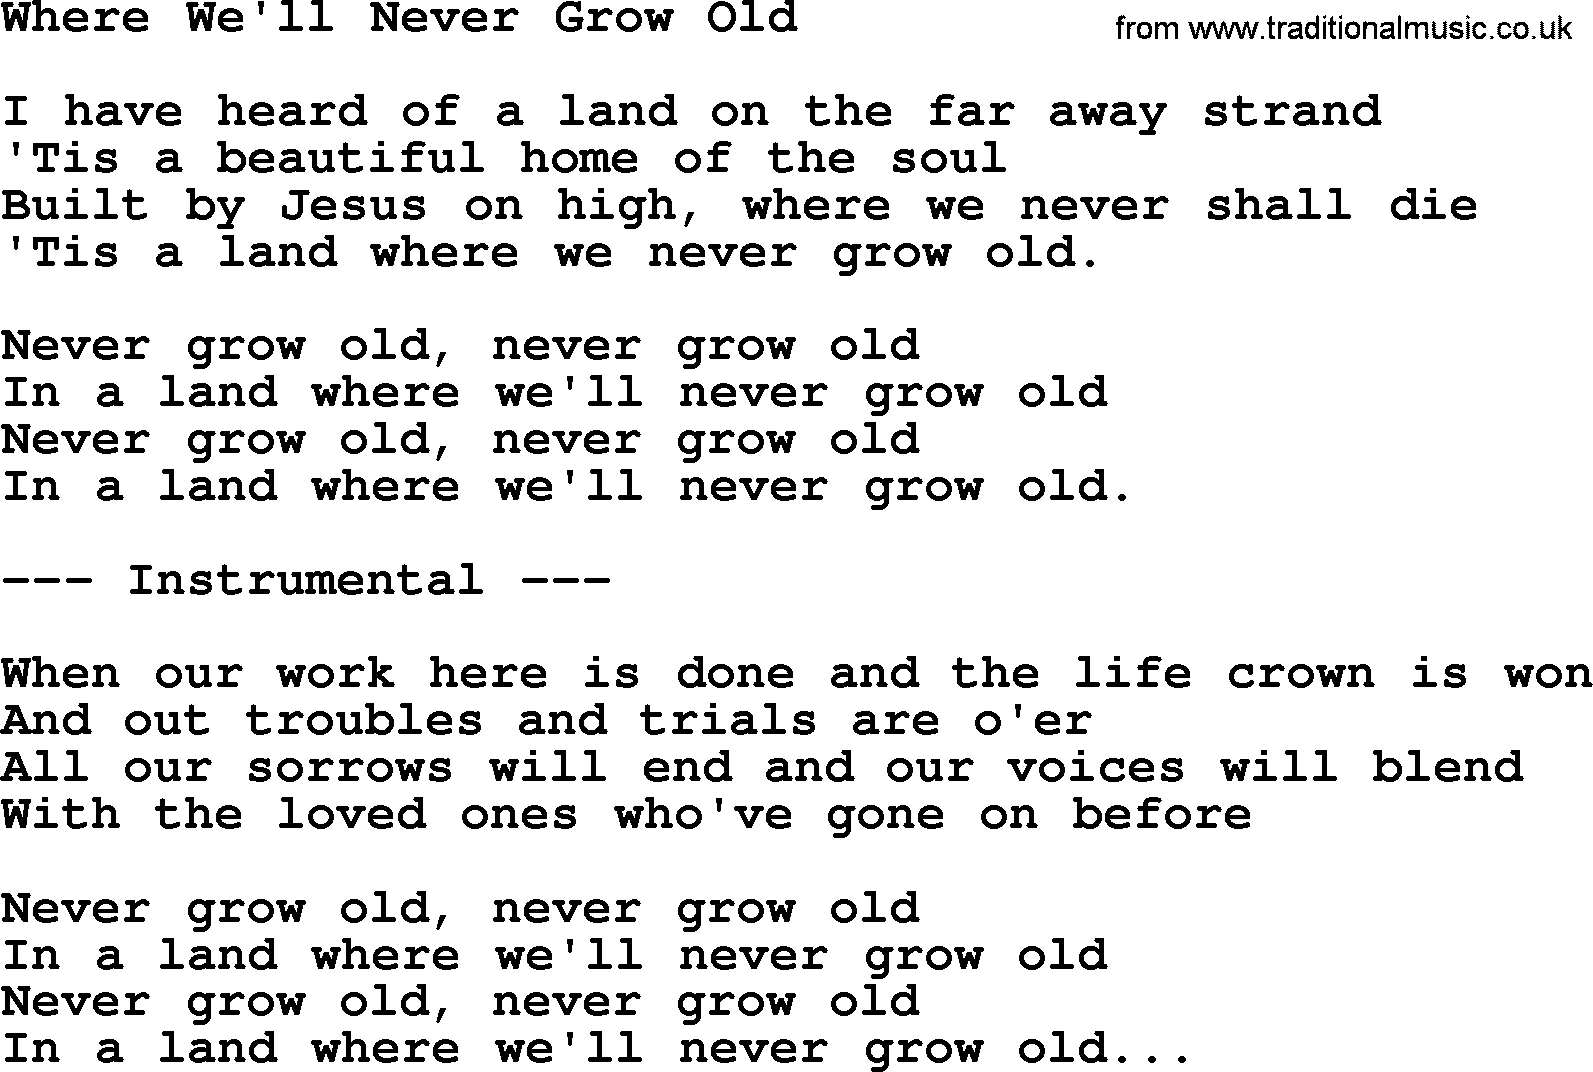 George Jones song: Where We'll Never Grow Old, lyrics